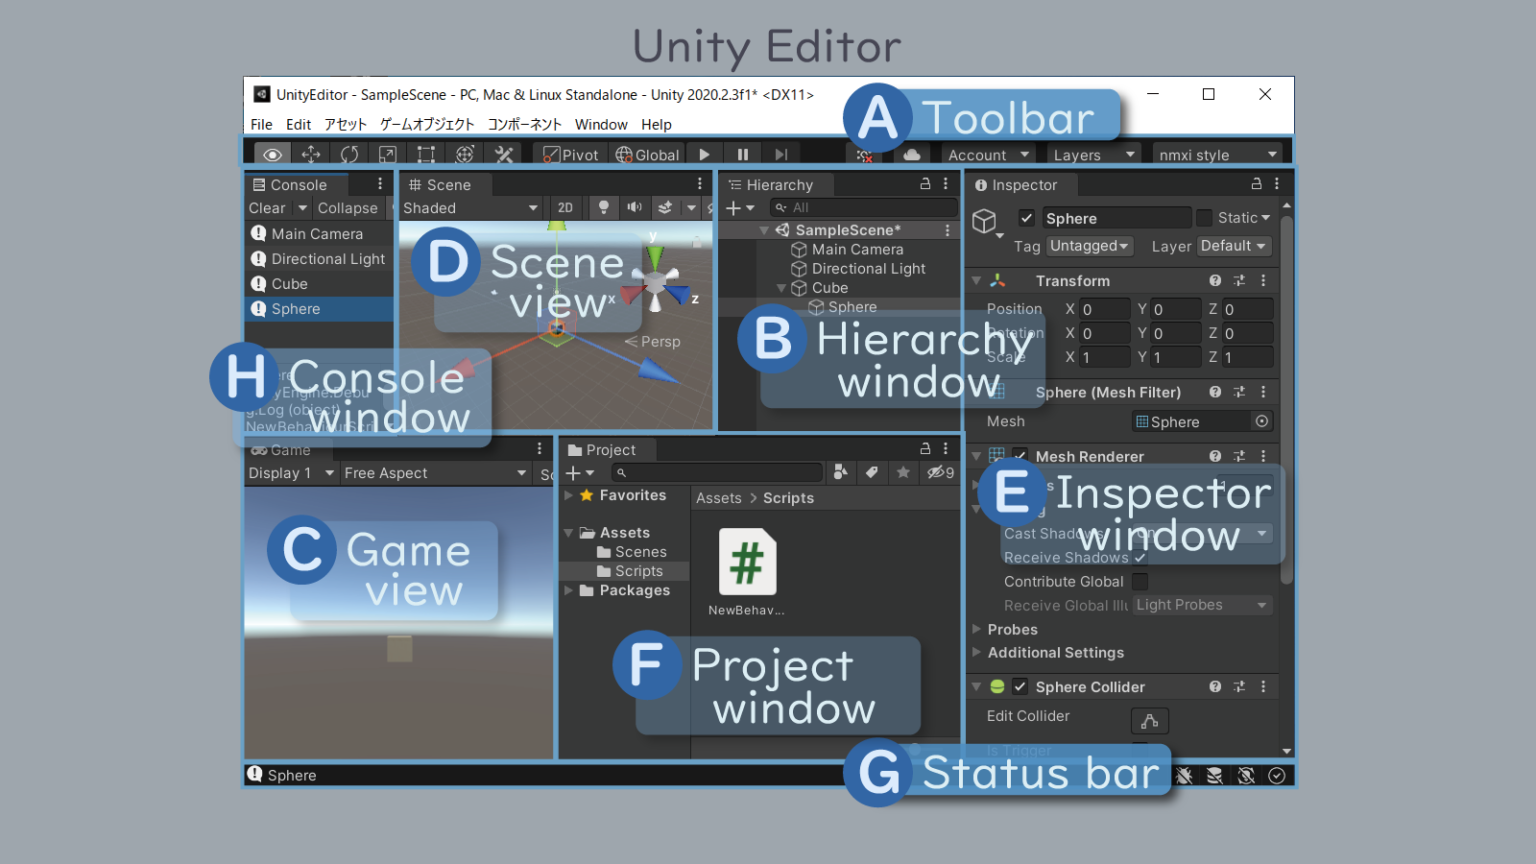 unity download editor